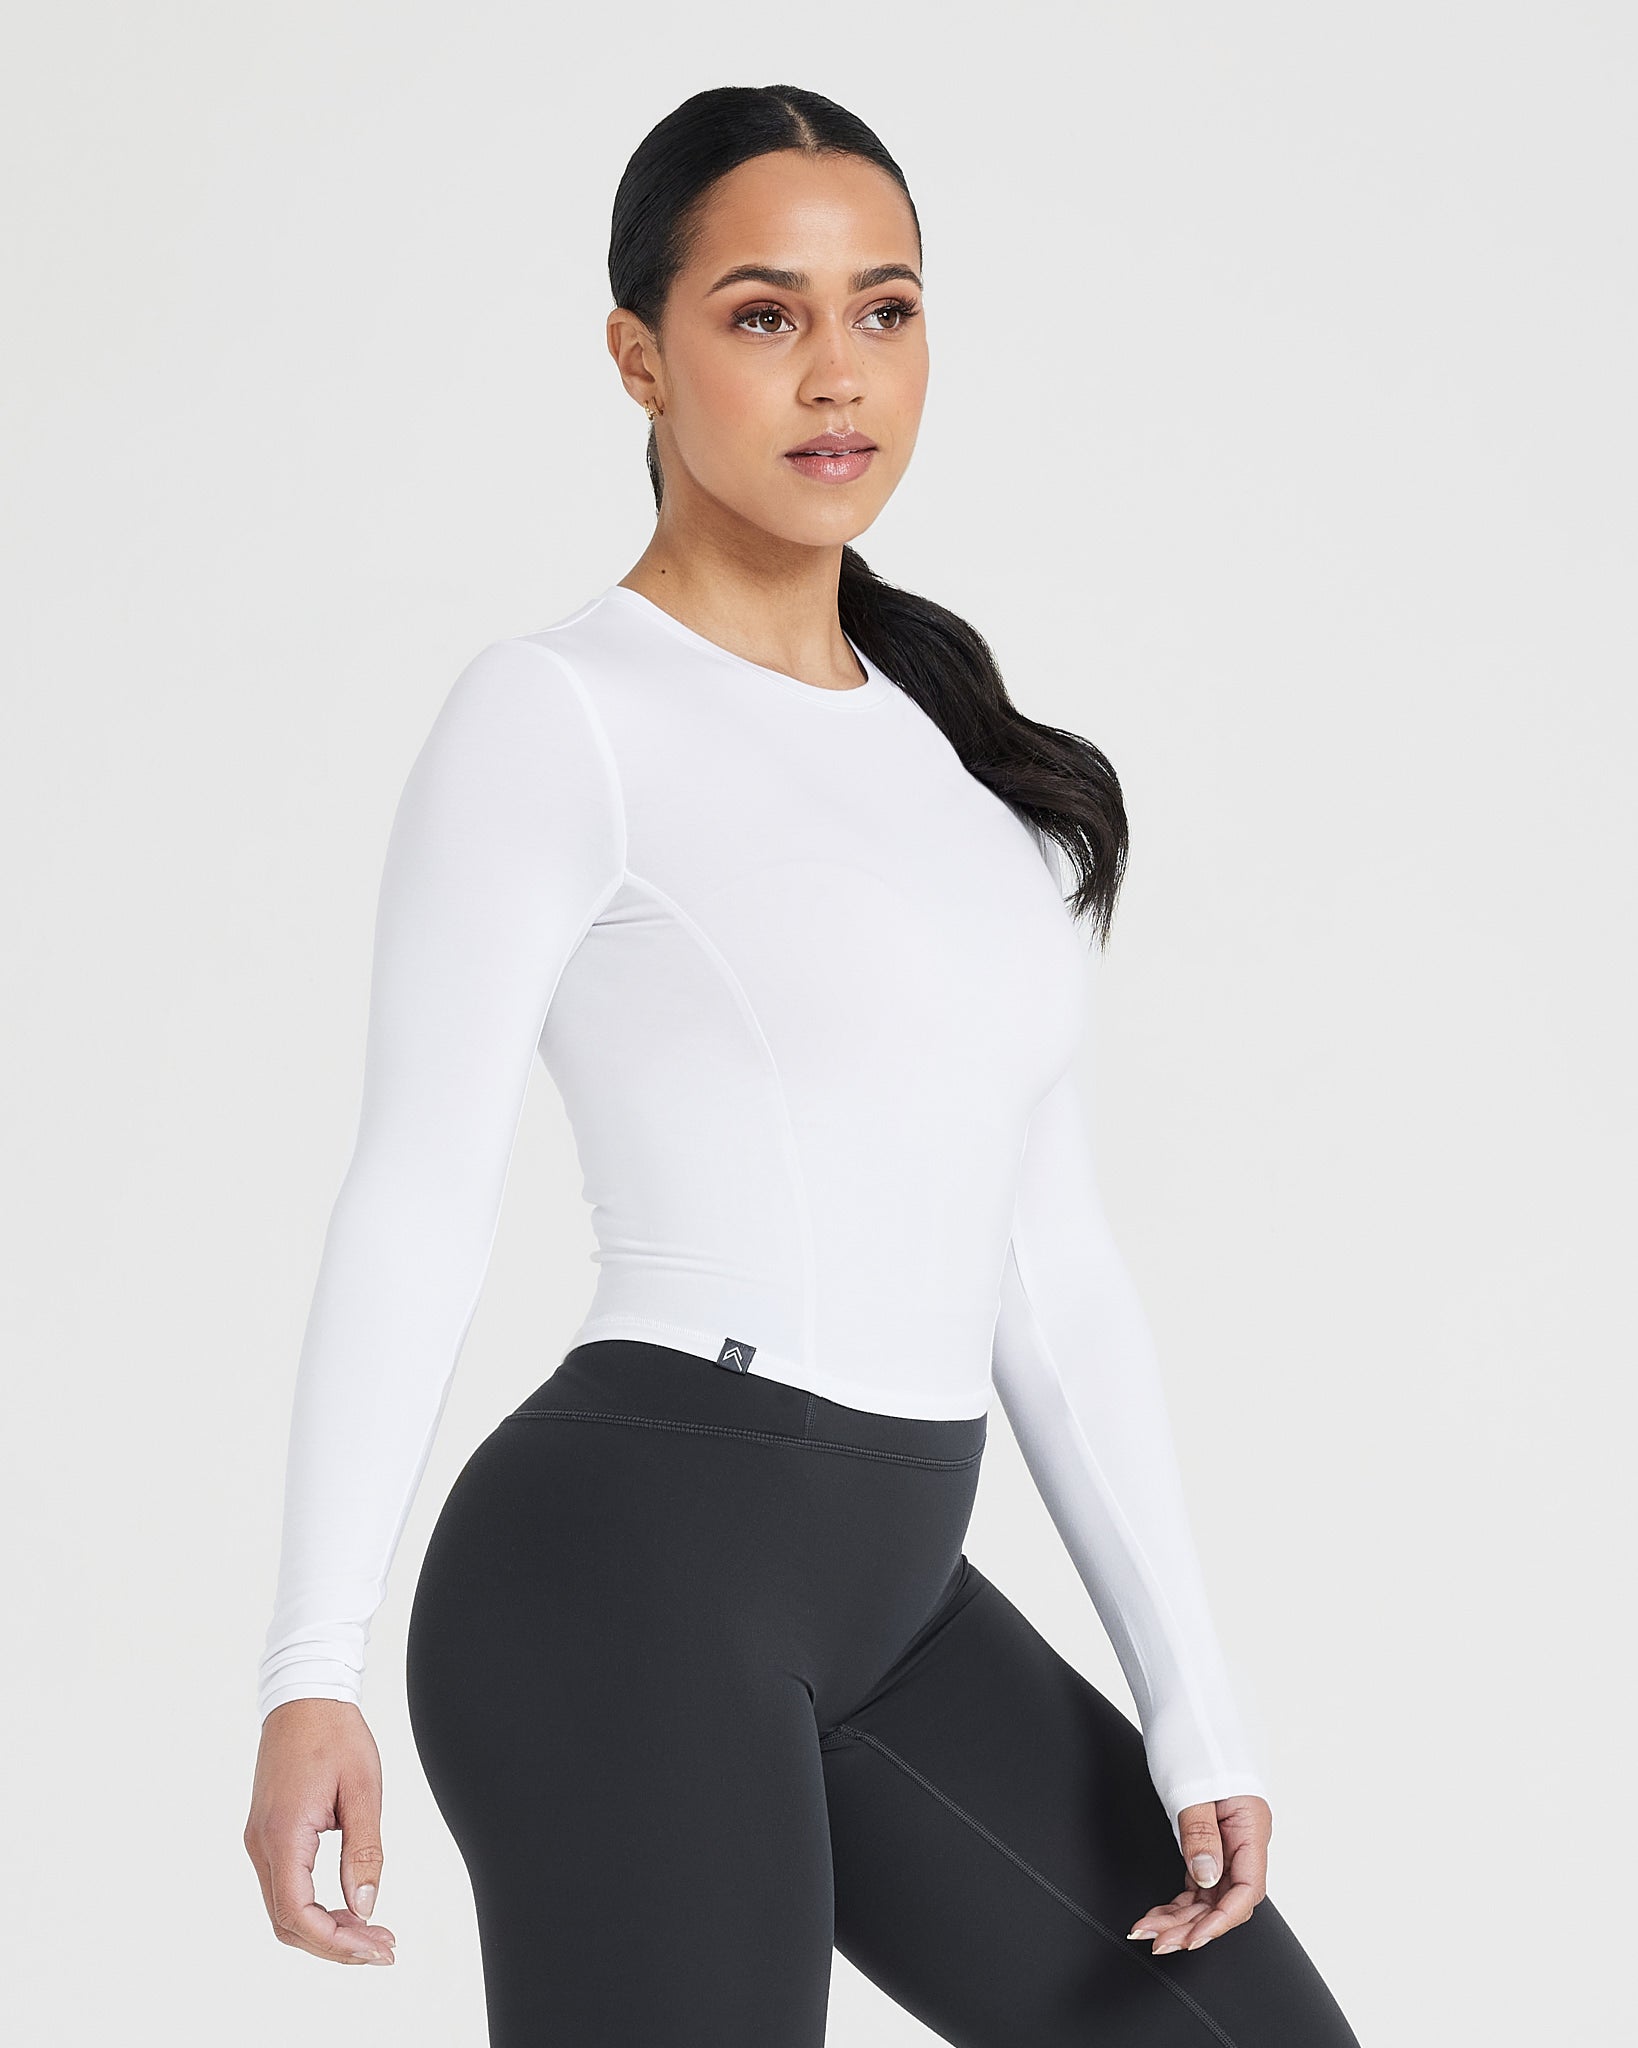 Tight White Long Sleeve Shirt Women's - Mid Length | Oner Active US